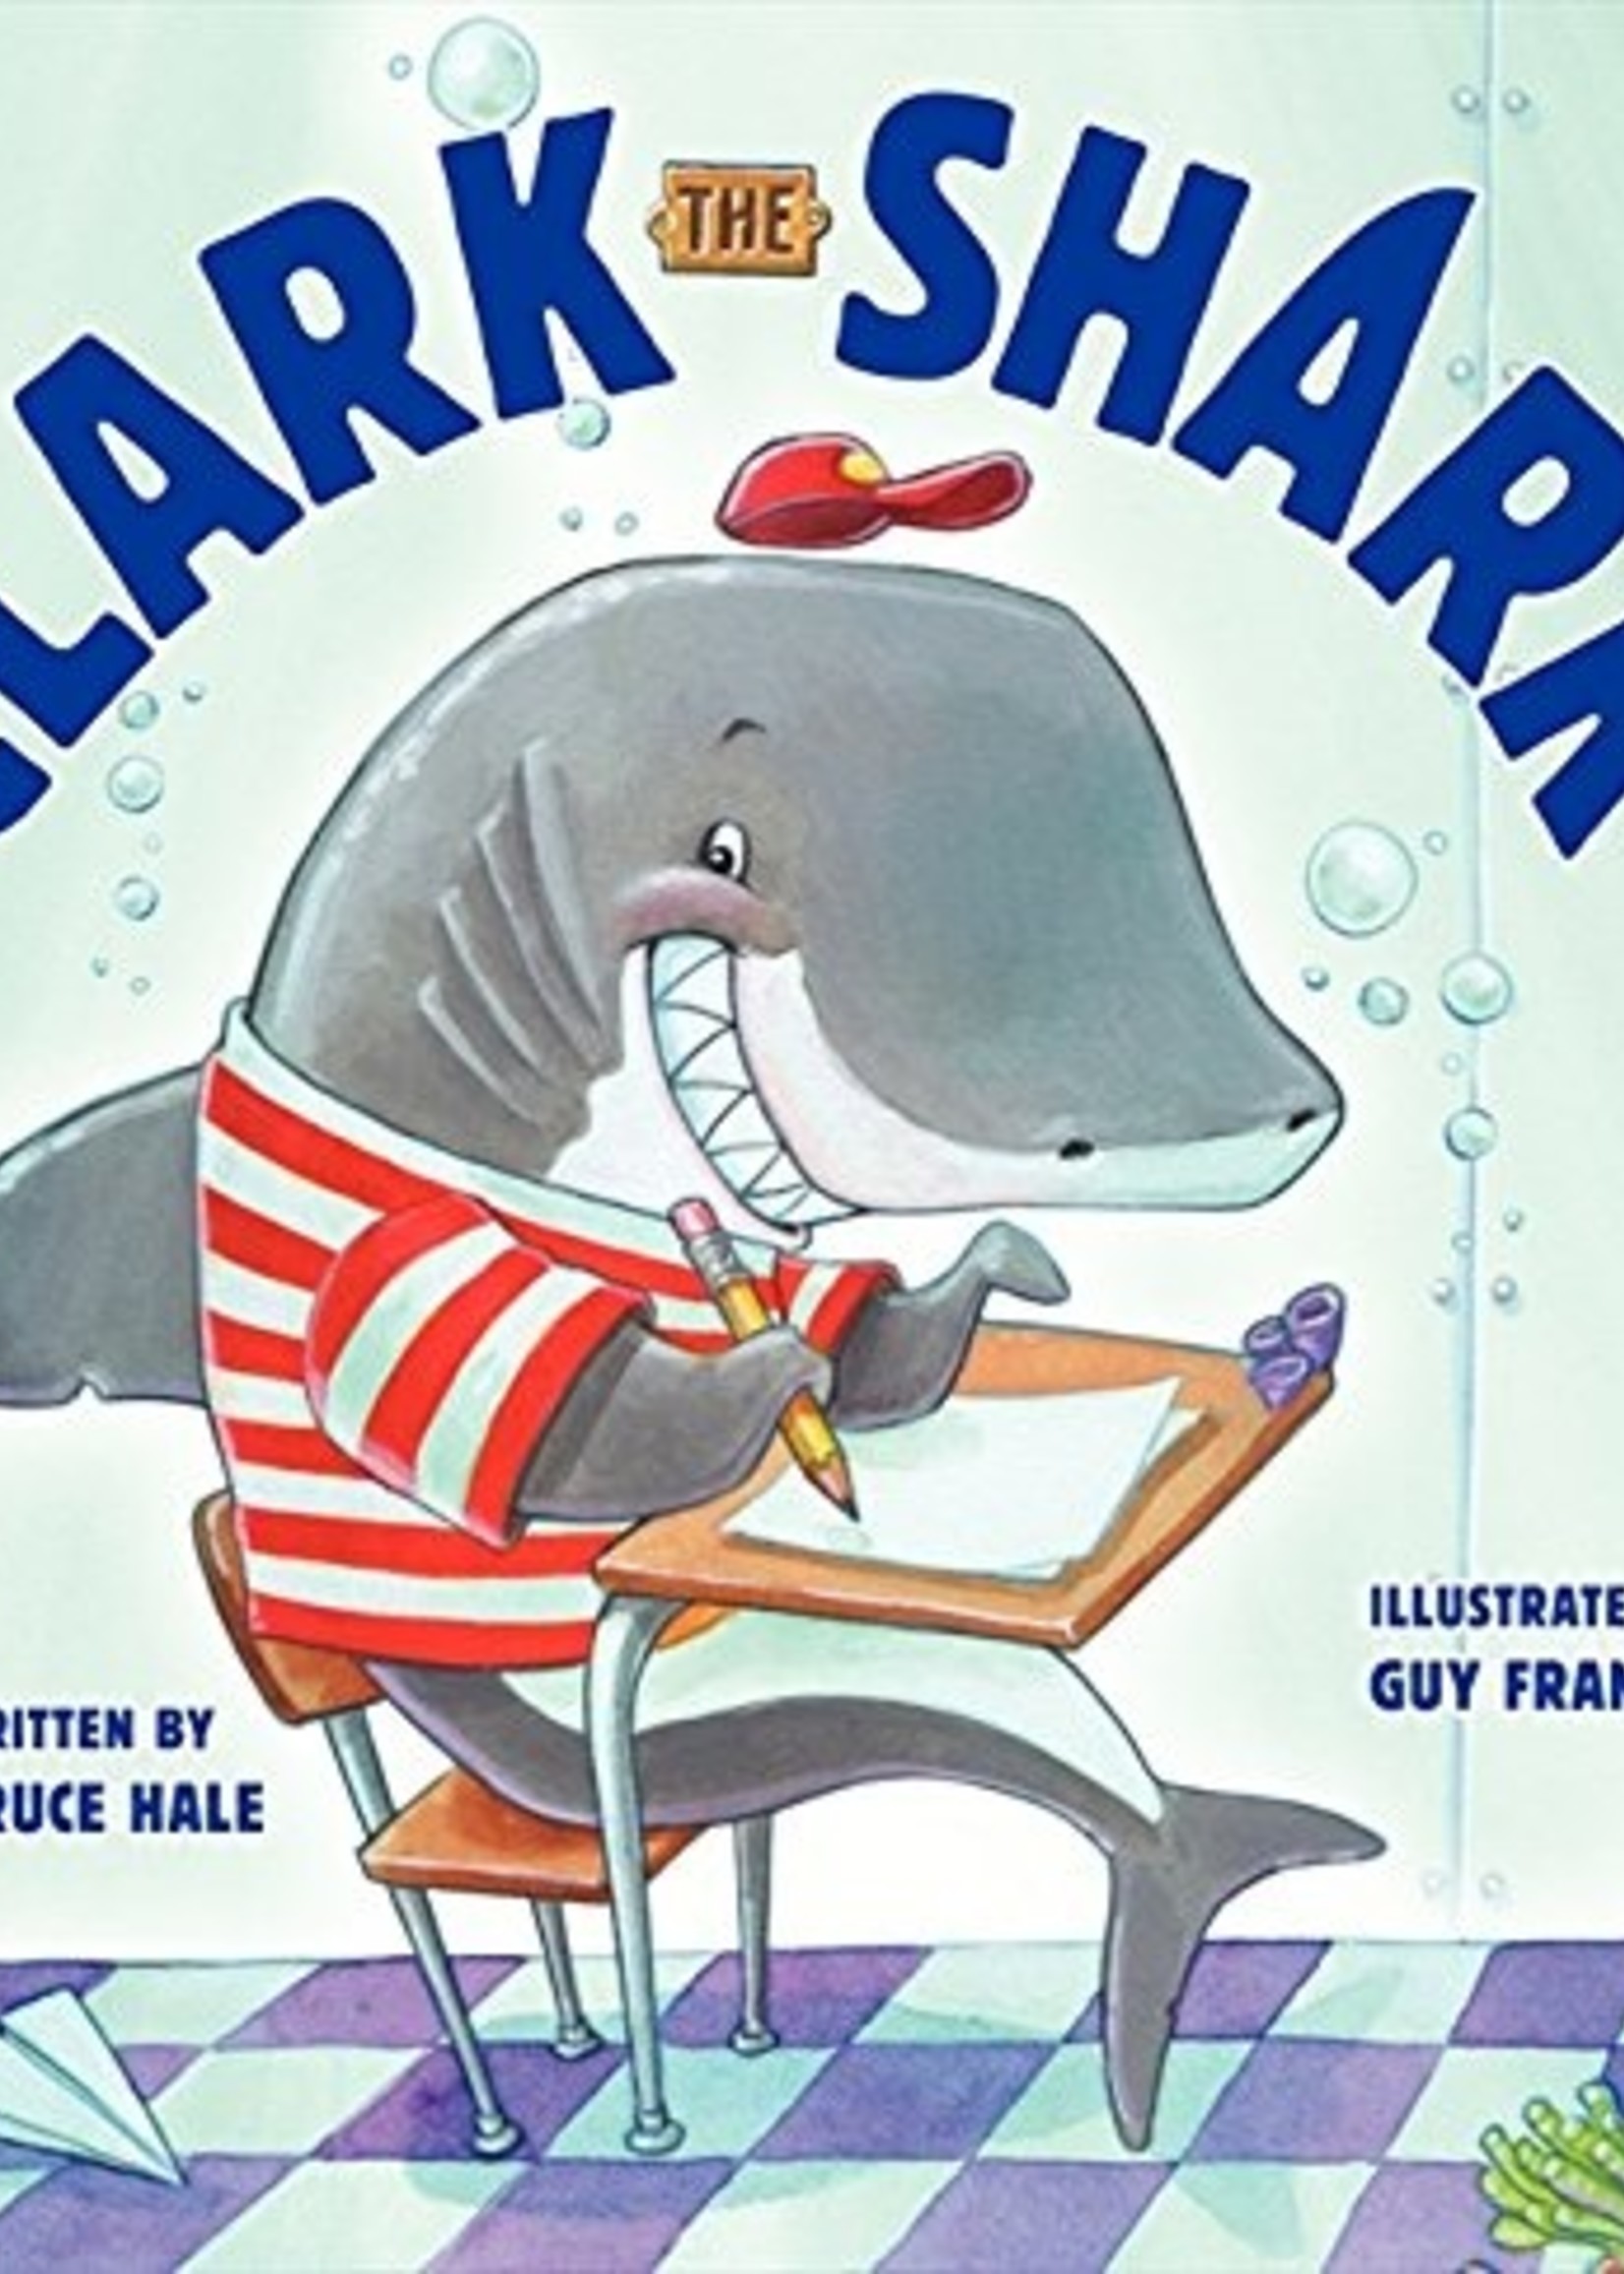 Harper Collins Publishers Clark the Shark